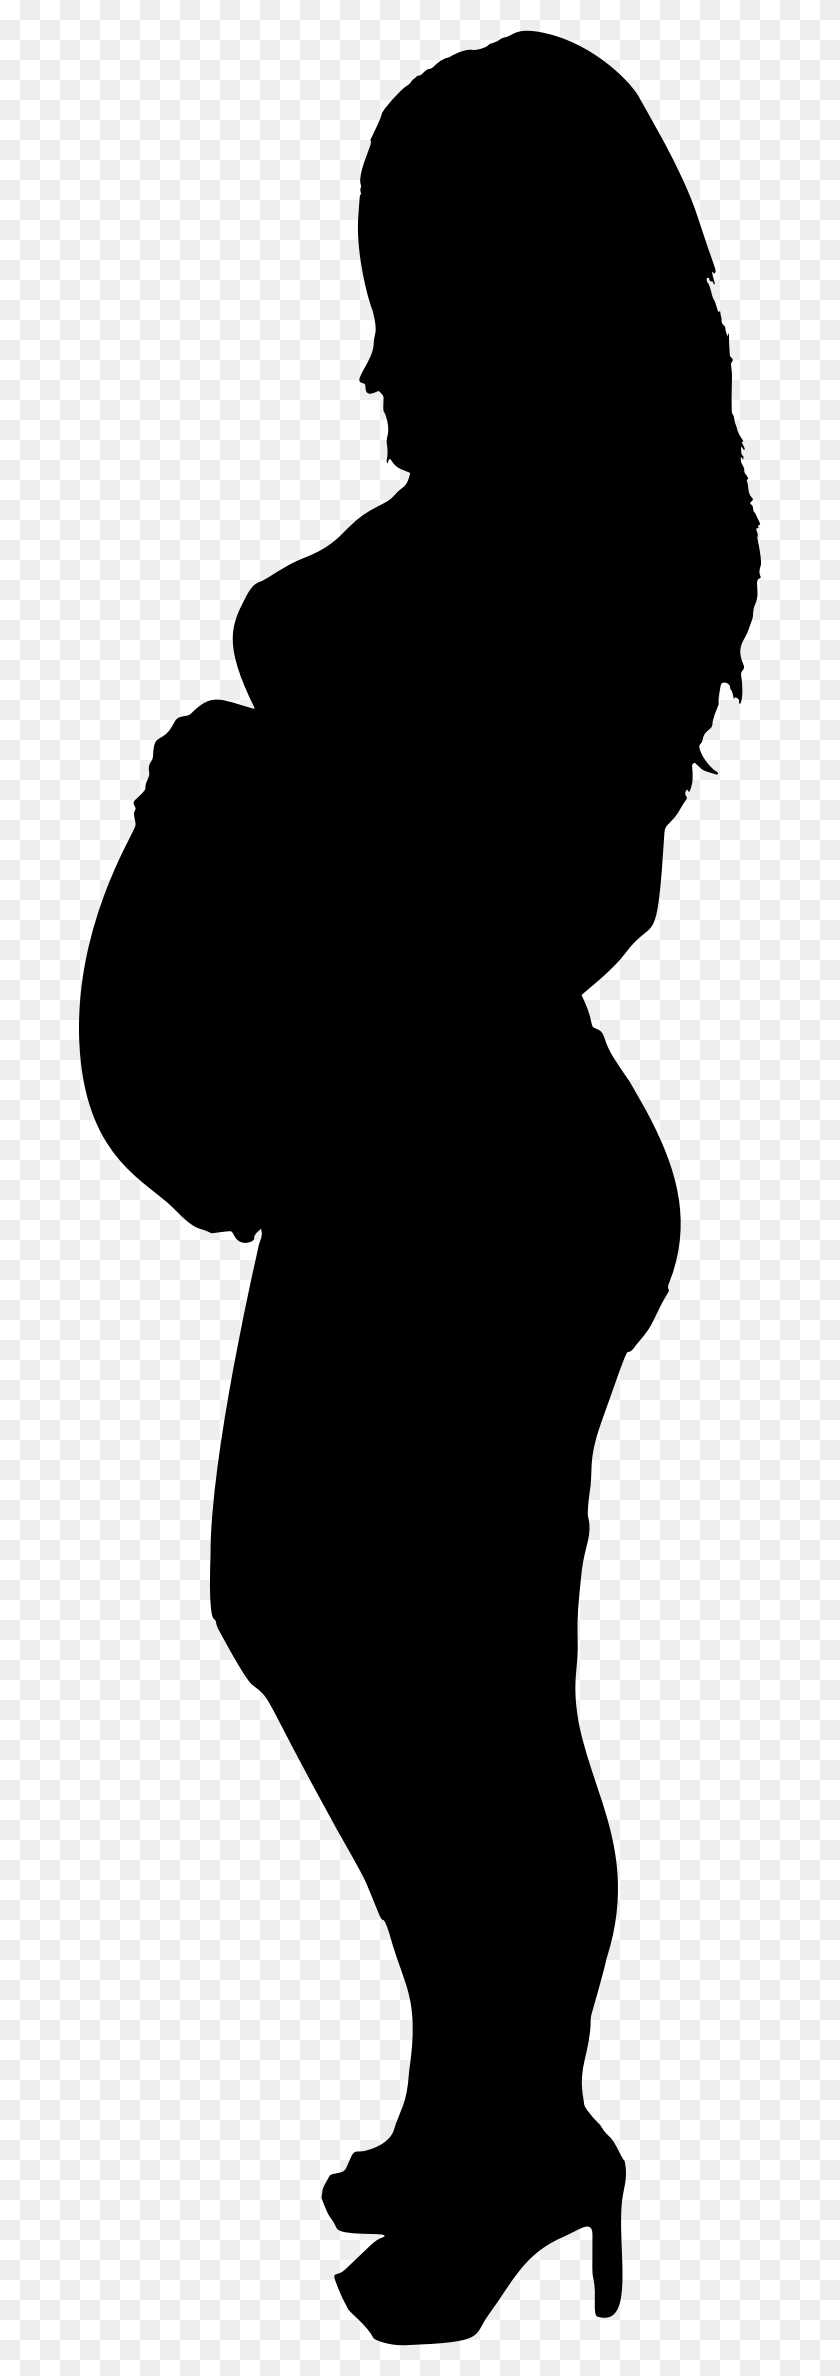 683x2316 X 2316 20 Mujer Embarazada Silueta Transparente, Gris, World Of Warcraft Hd Png